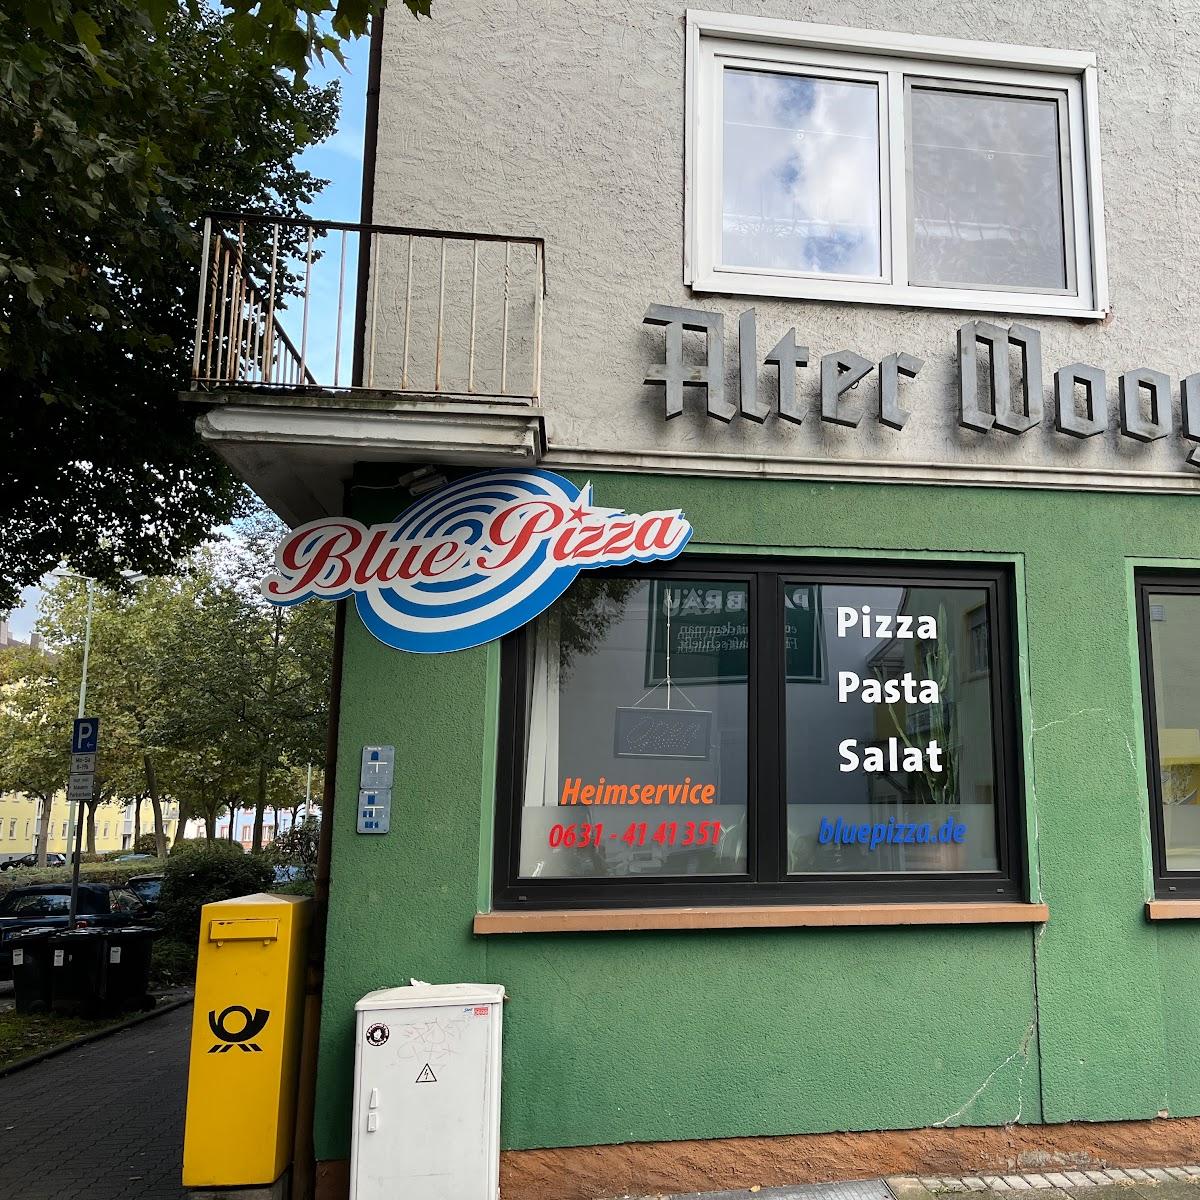 Restaurant "bluepizza" in Kaiserslautern